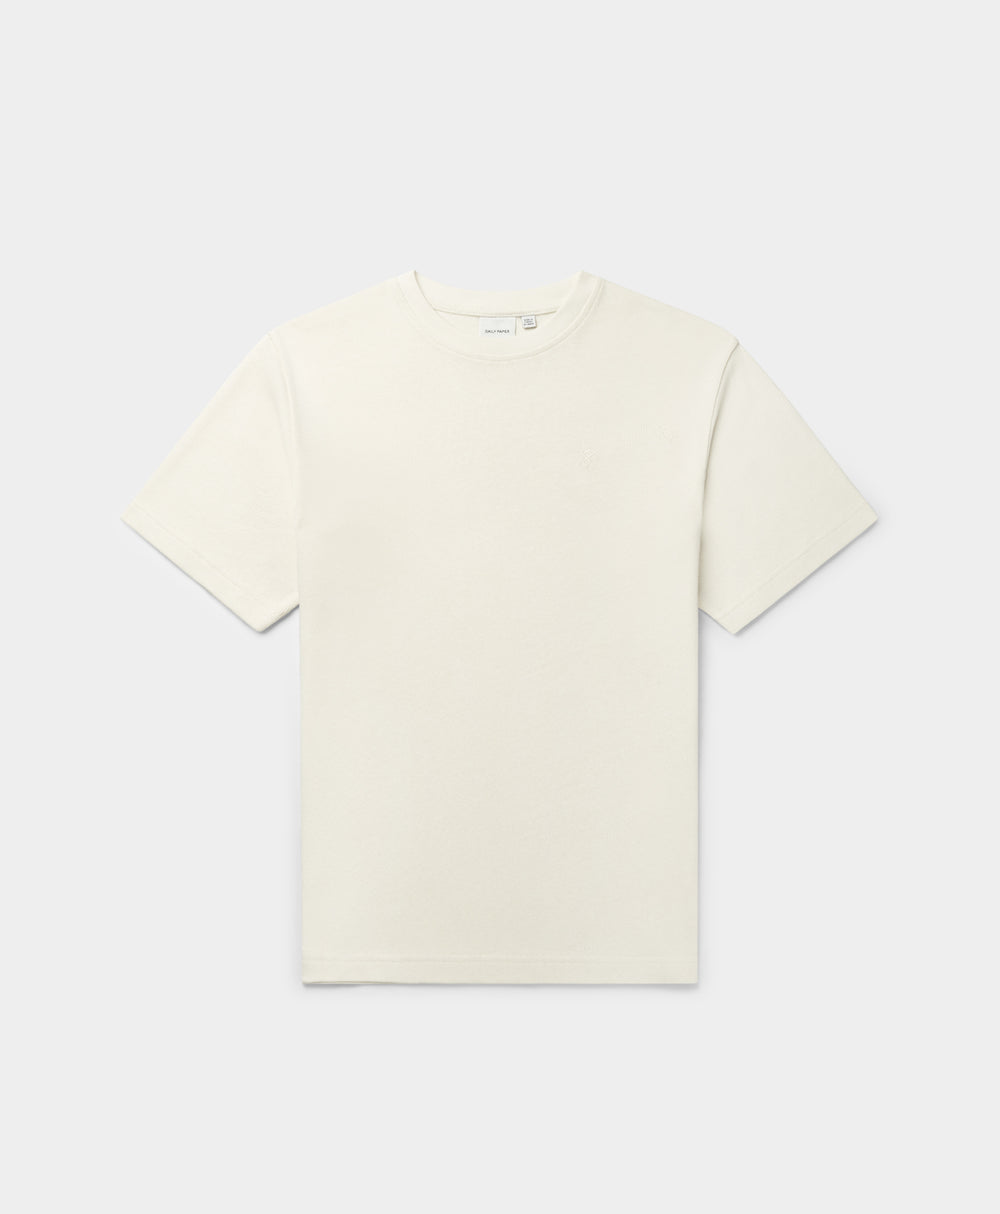 DP - Pristine White Knit T-Shirt - Packshot - Front